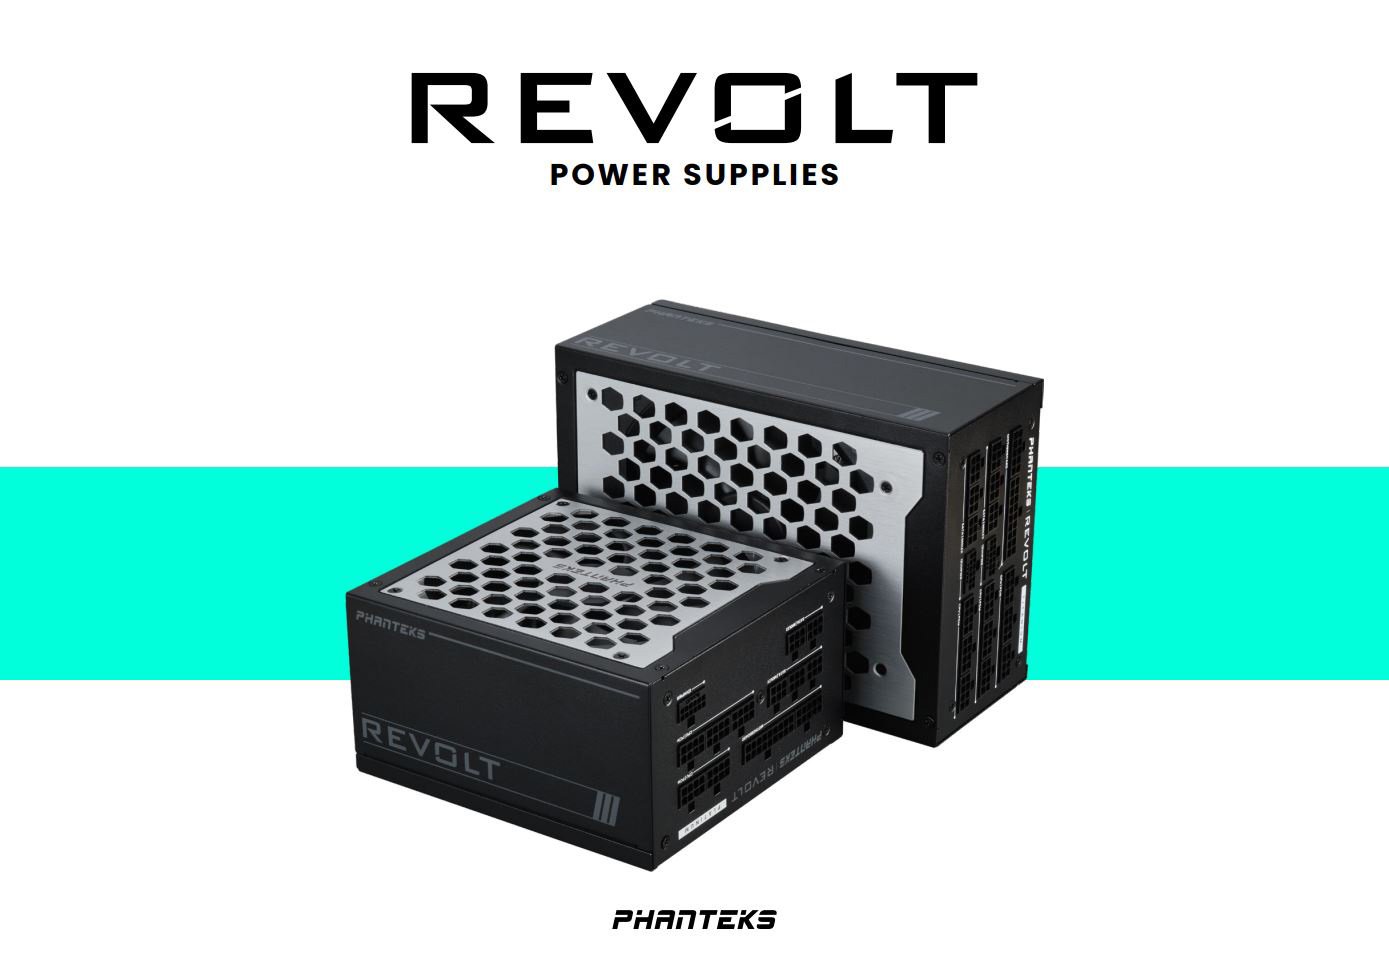 Phanteks Revolt Series Power Supply